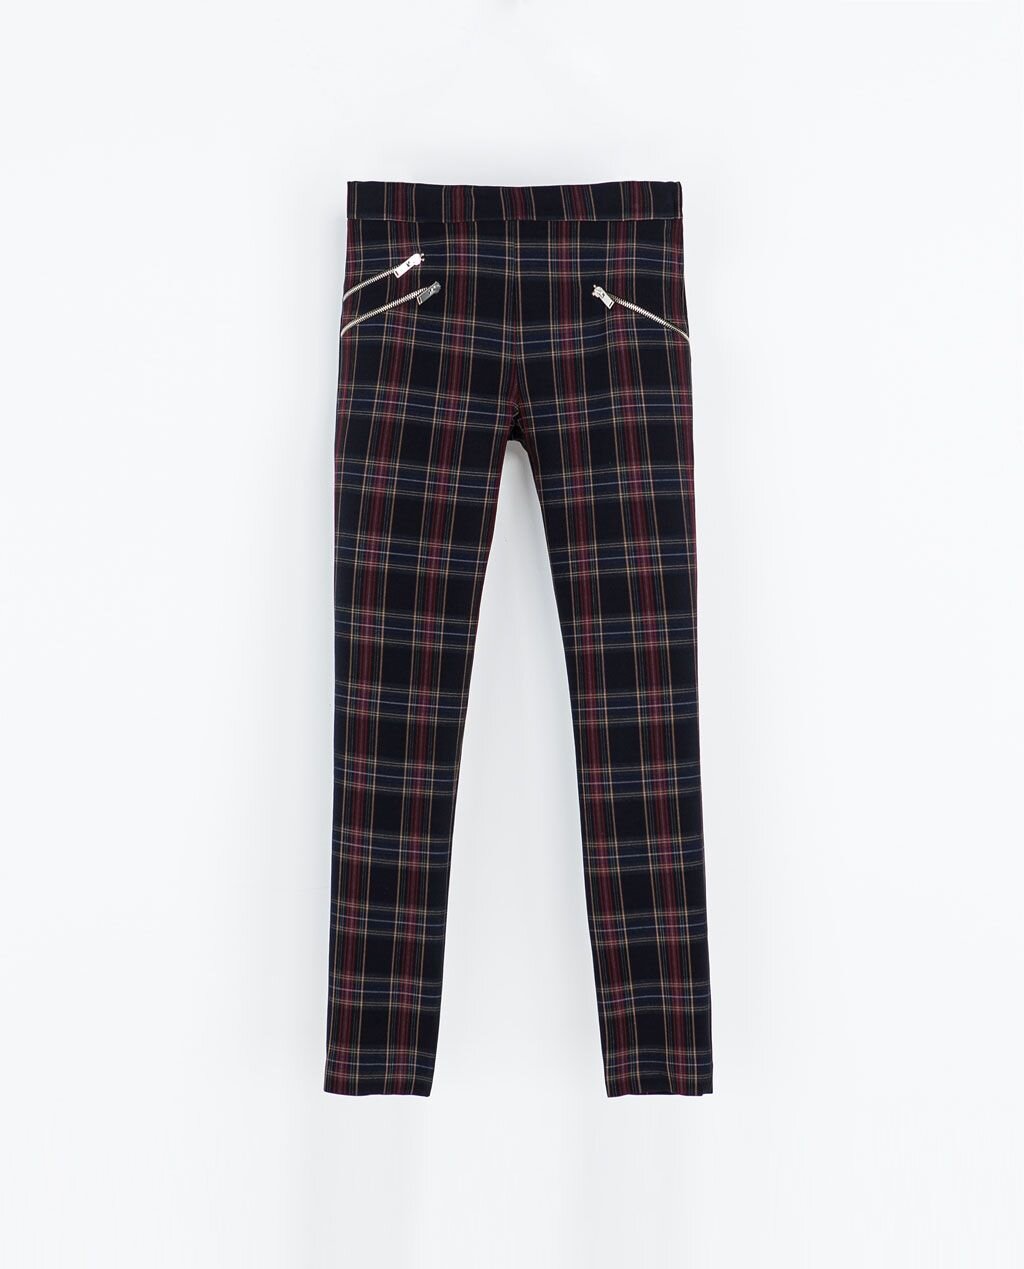 Zara | Pants & Jumpsuits | Zara Yellow Plaid Pants Xs | Poshmark